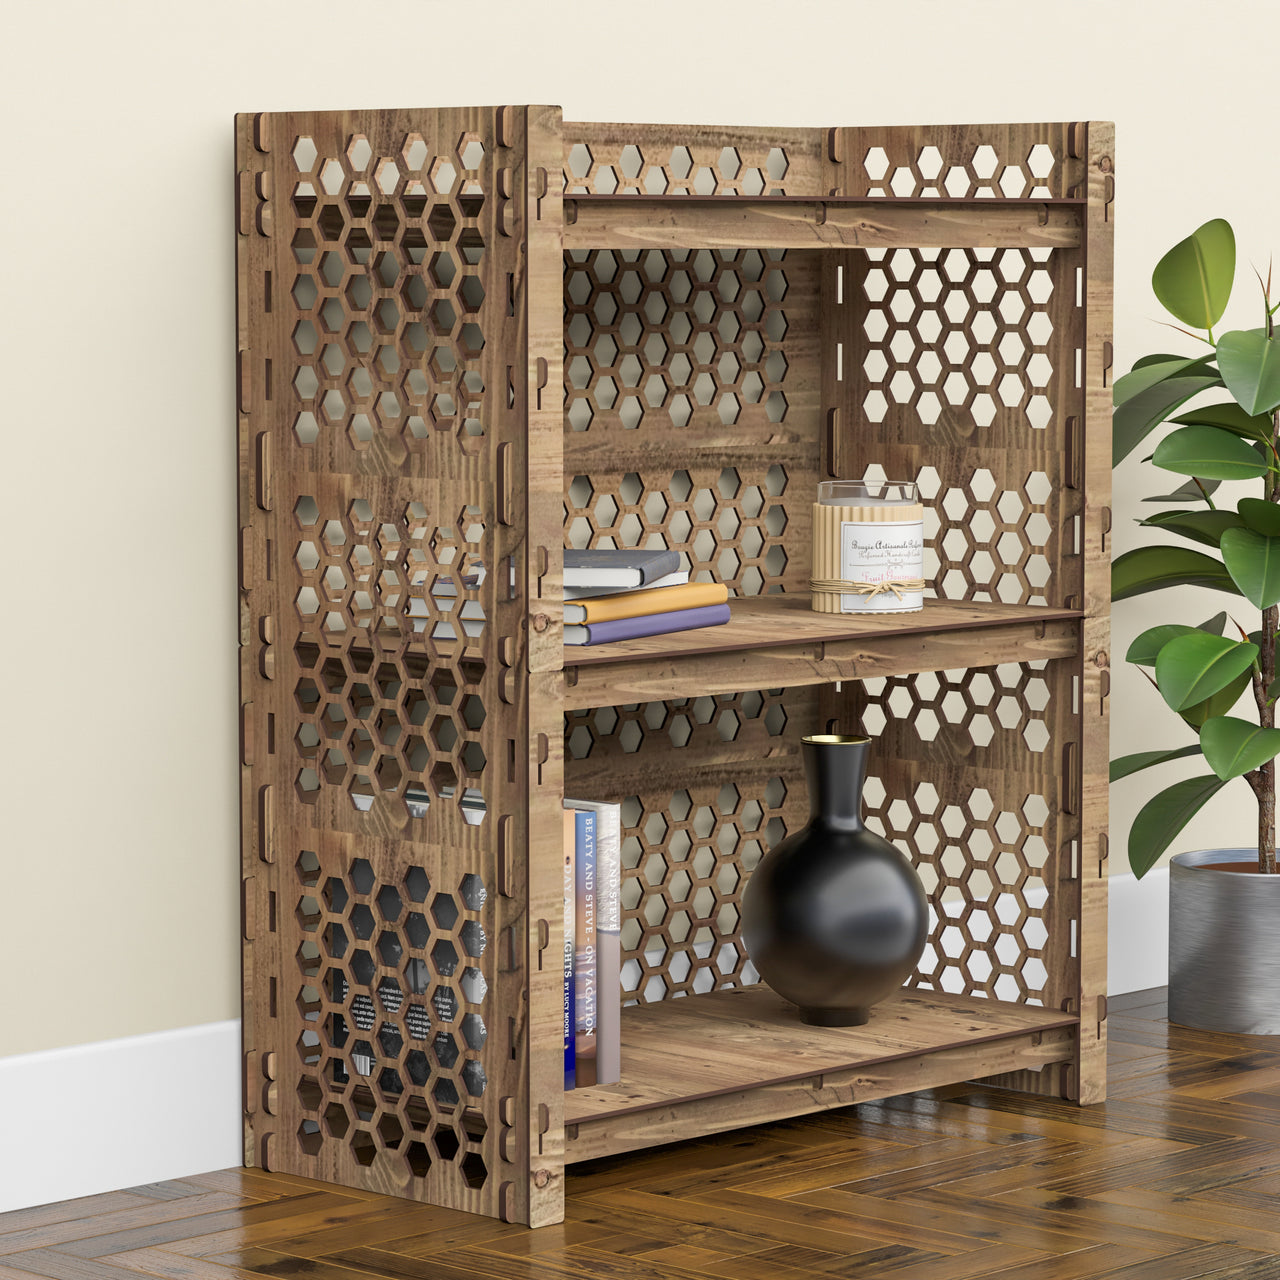 Honeycomb-S LUX 3-tier Bookshelf Bookcase Shelving Unit